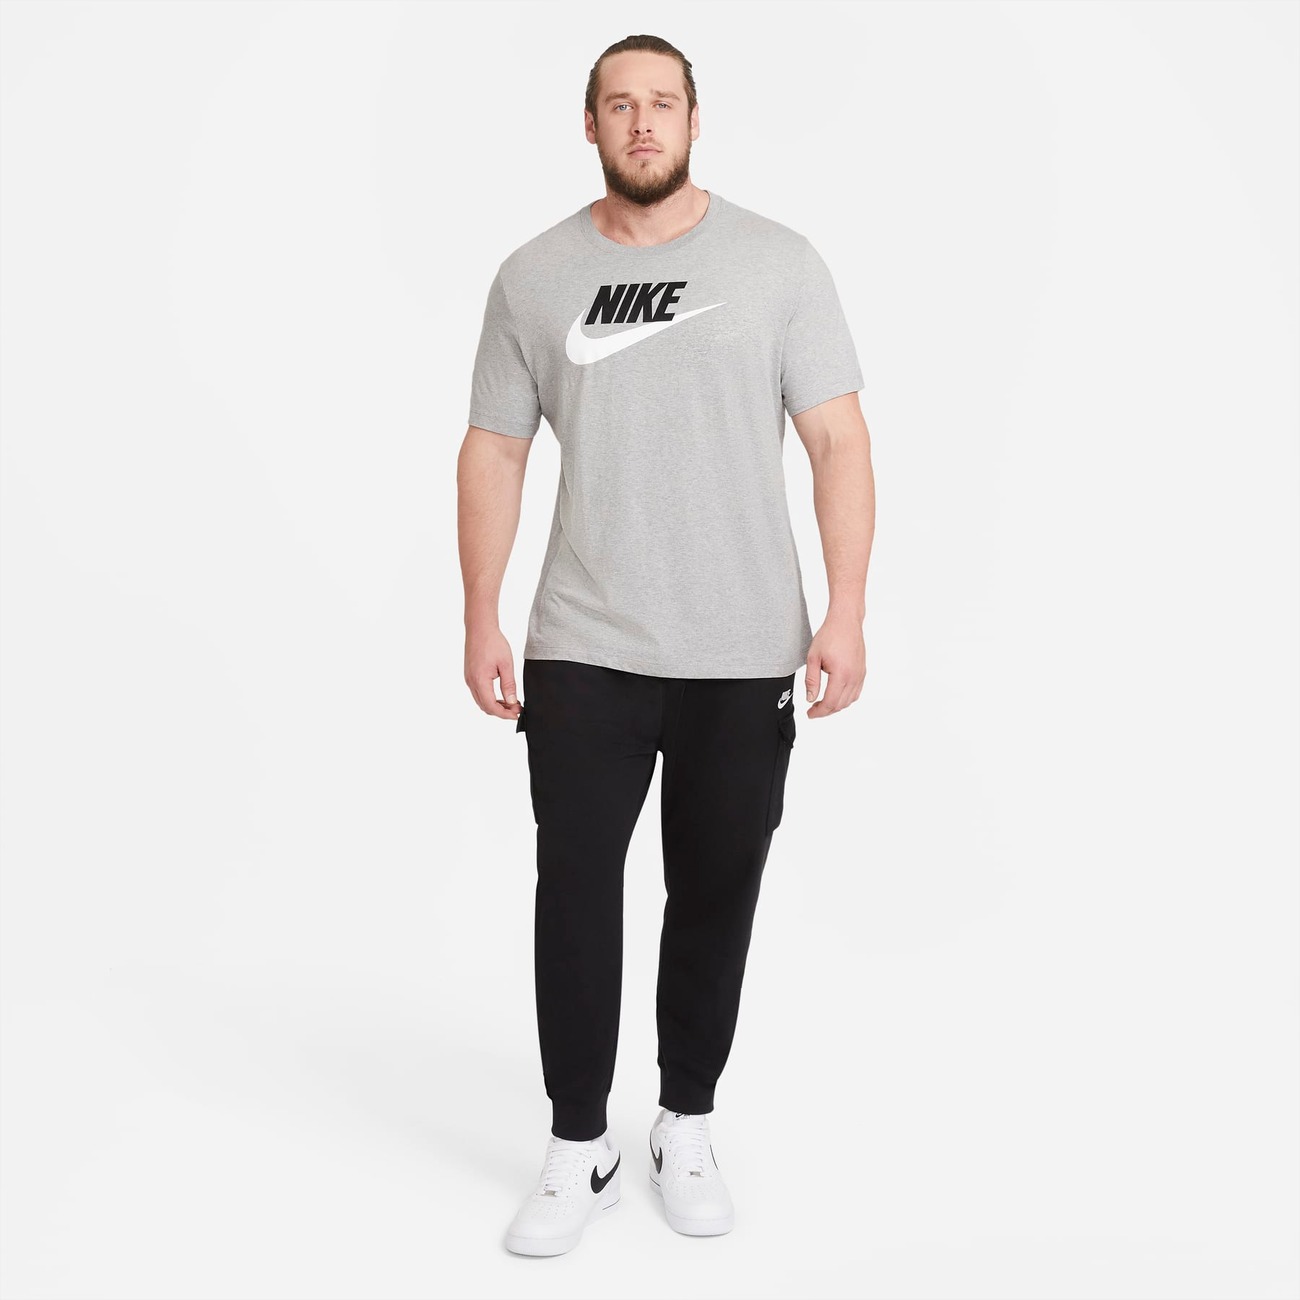 Camiseta Nike Sportswear Masculina - Foto 11